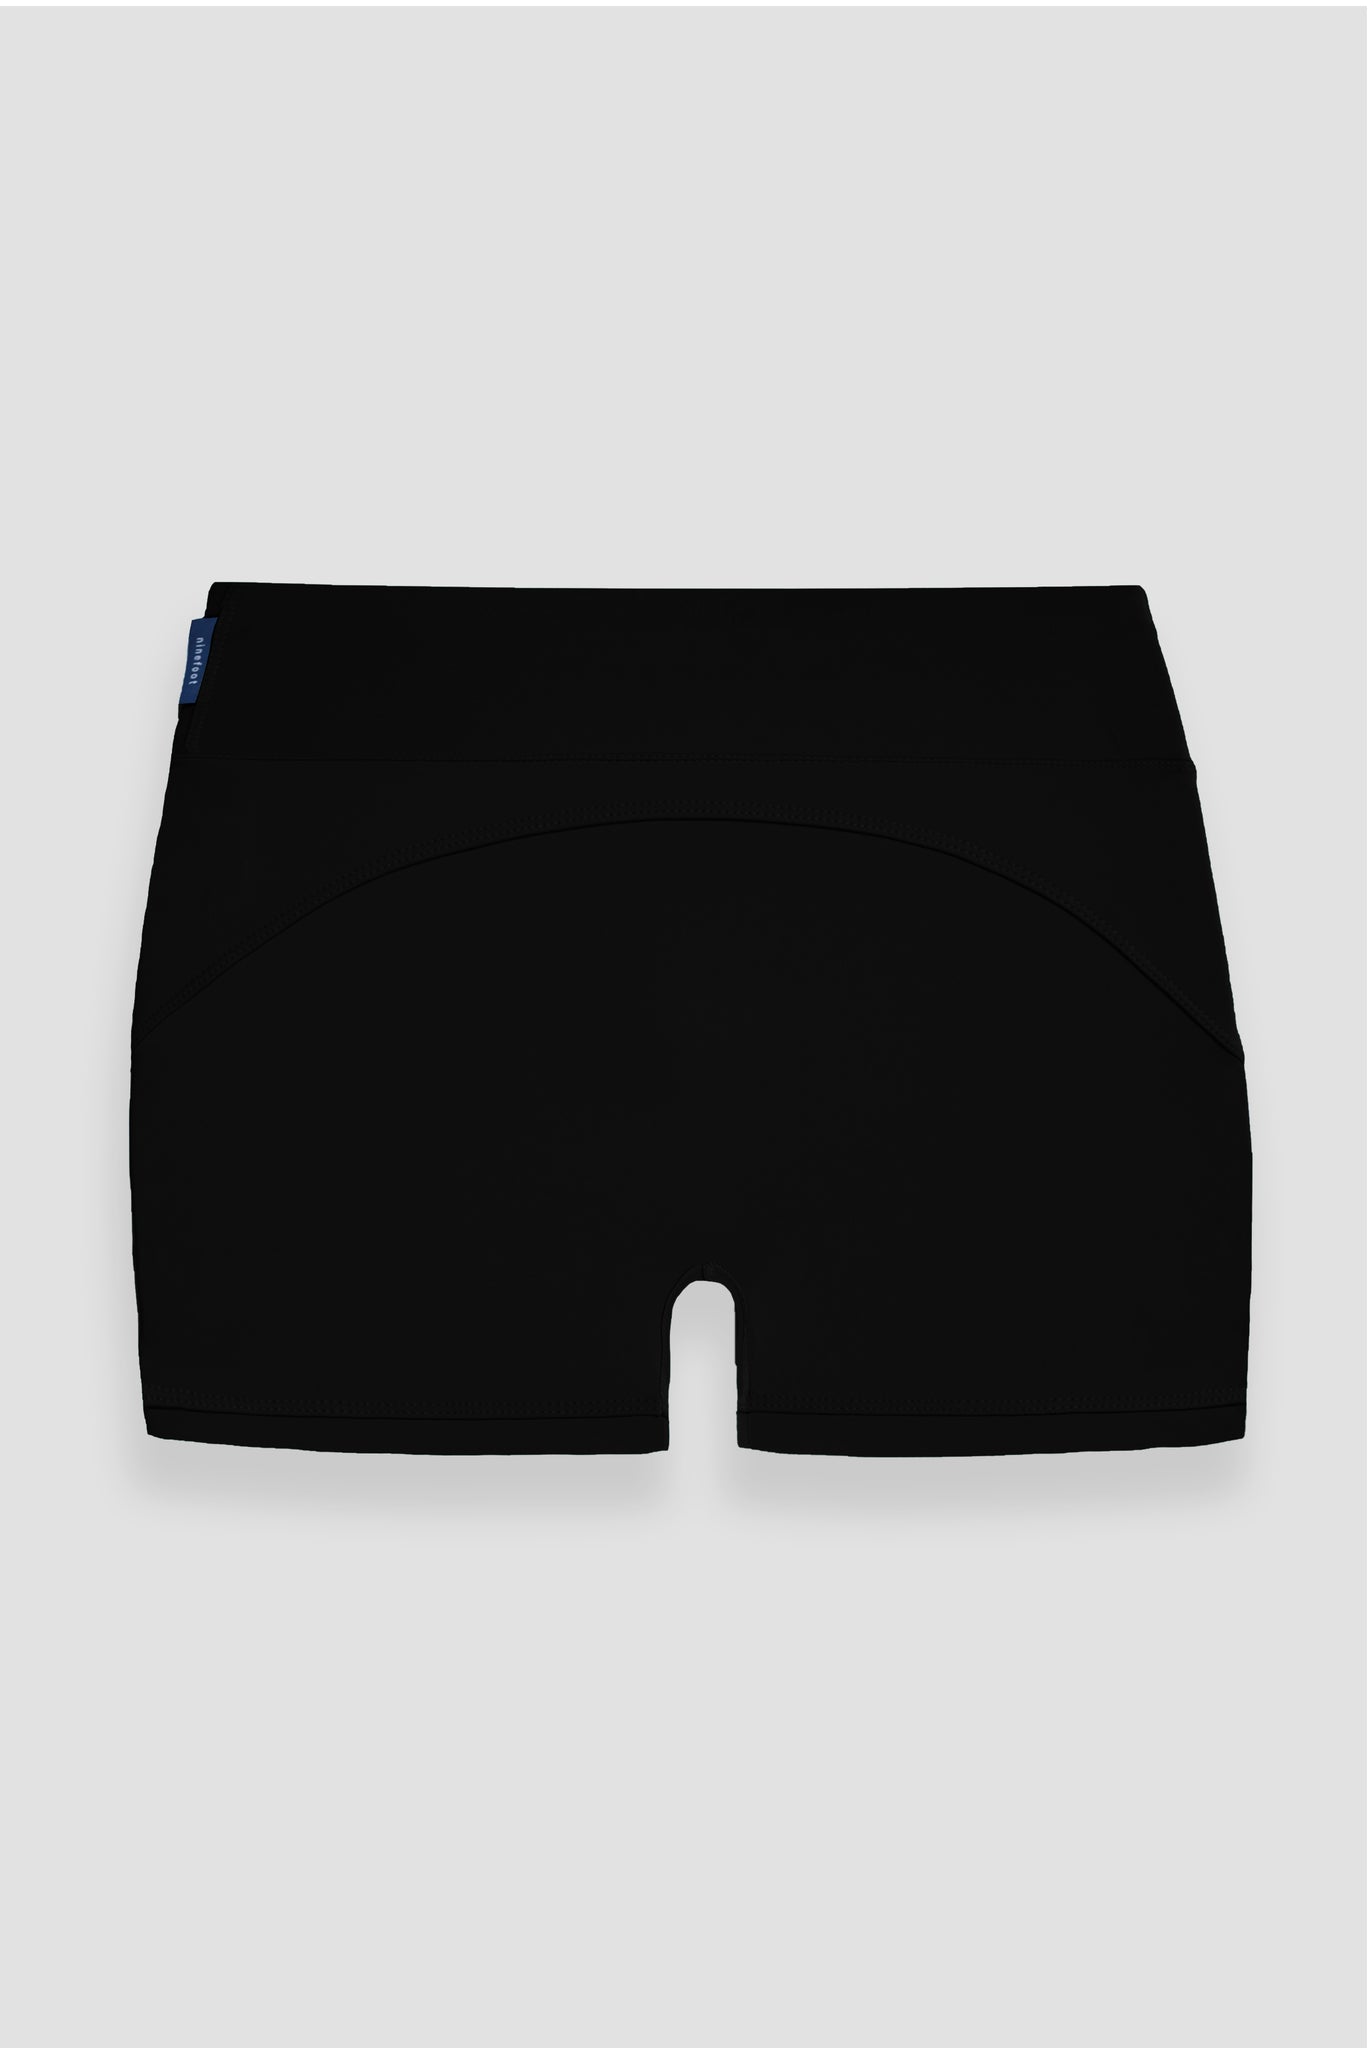 Ninefoot Studio Gerupuk Shorts in Black | One piece